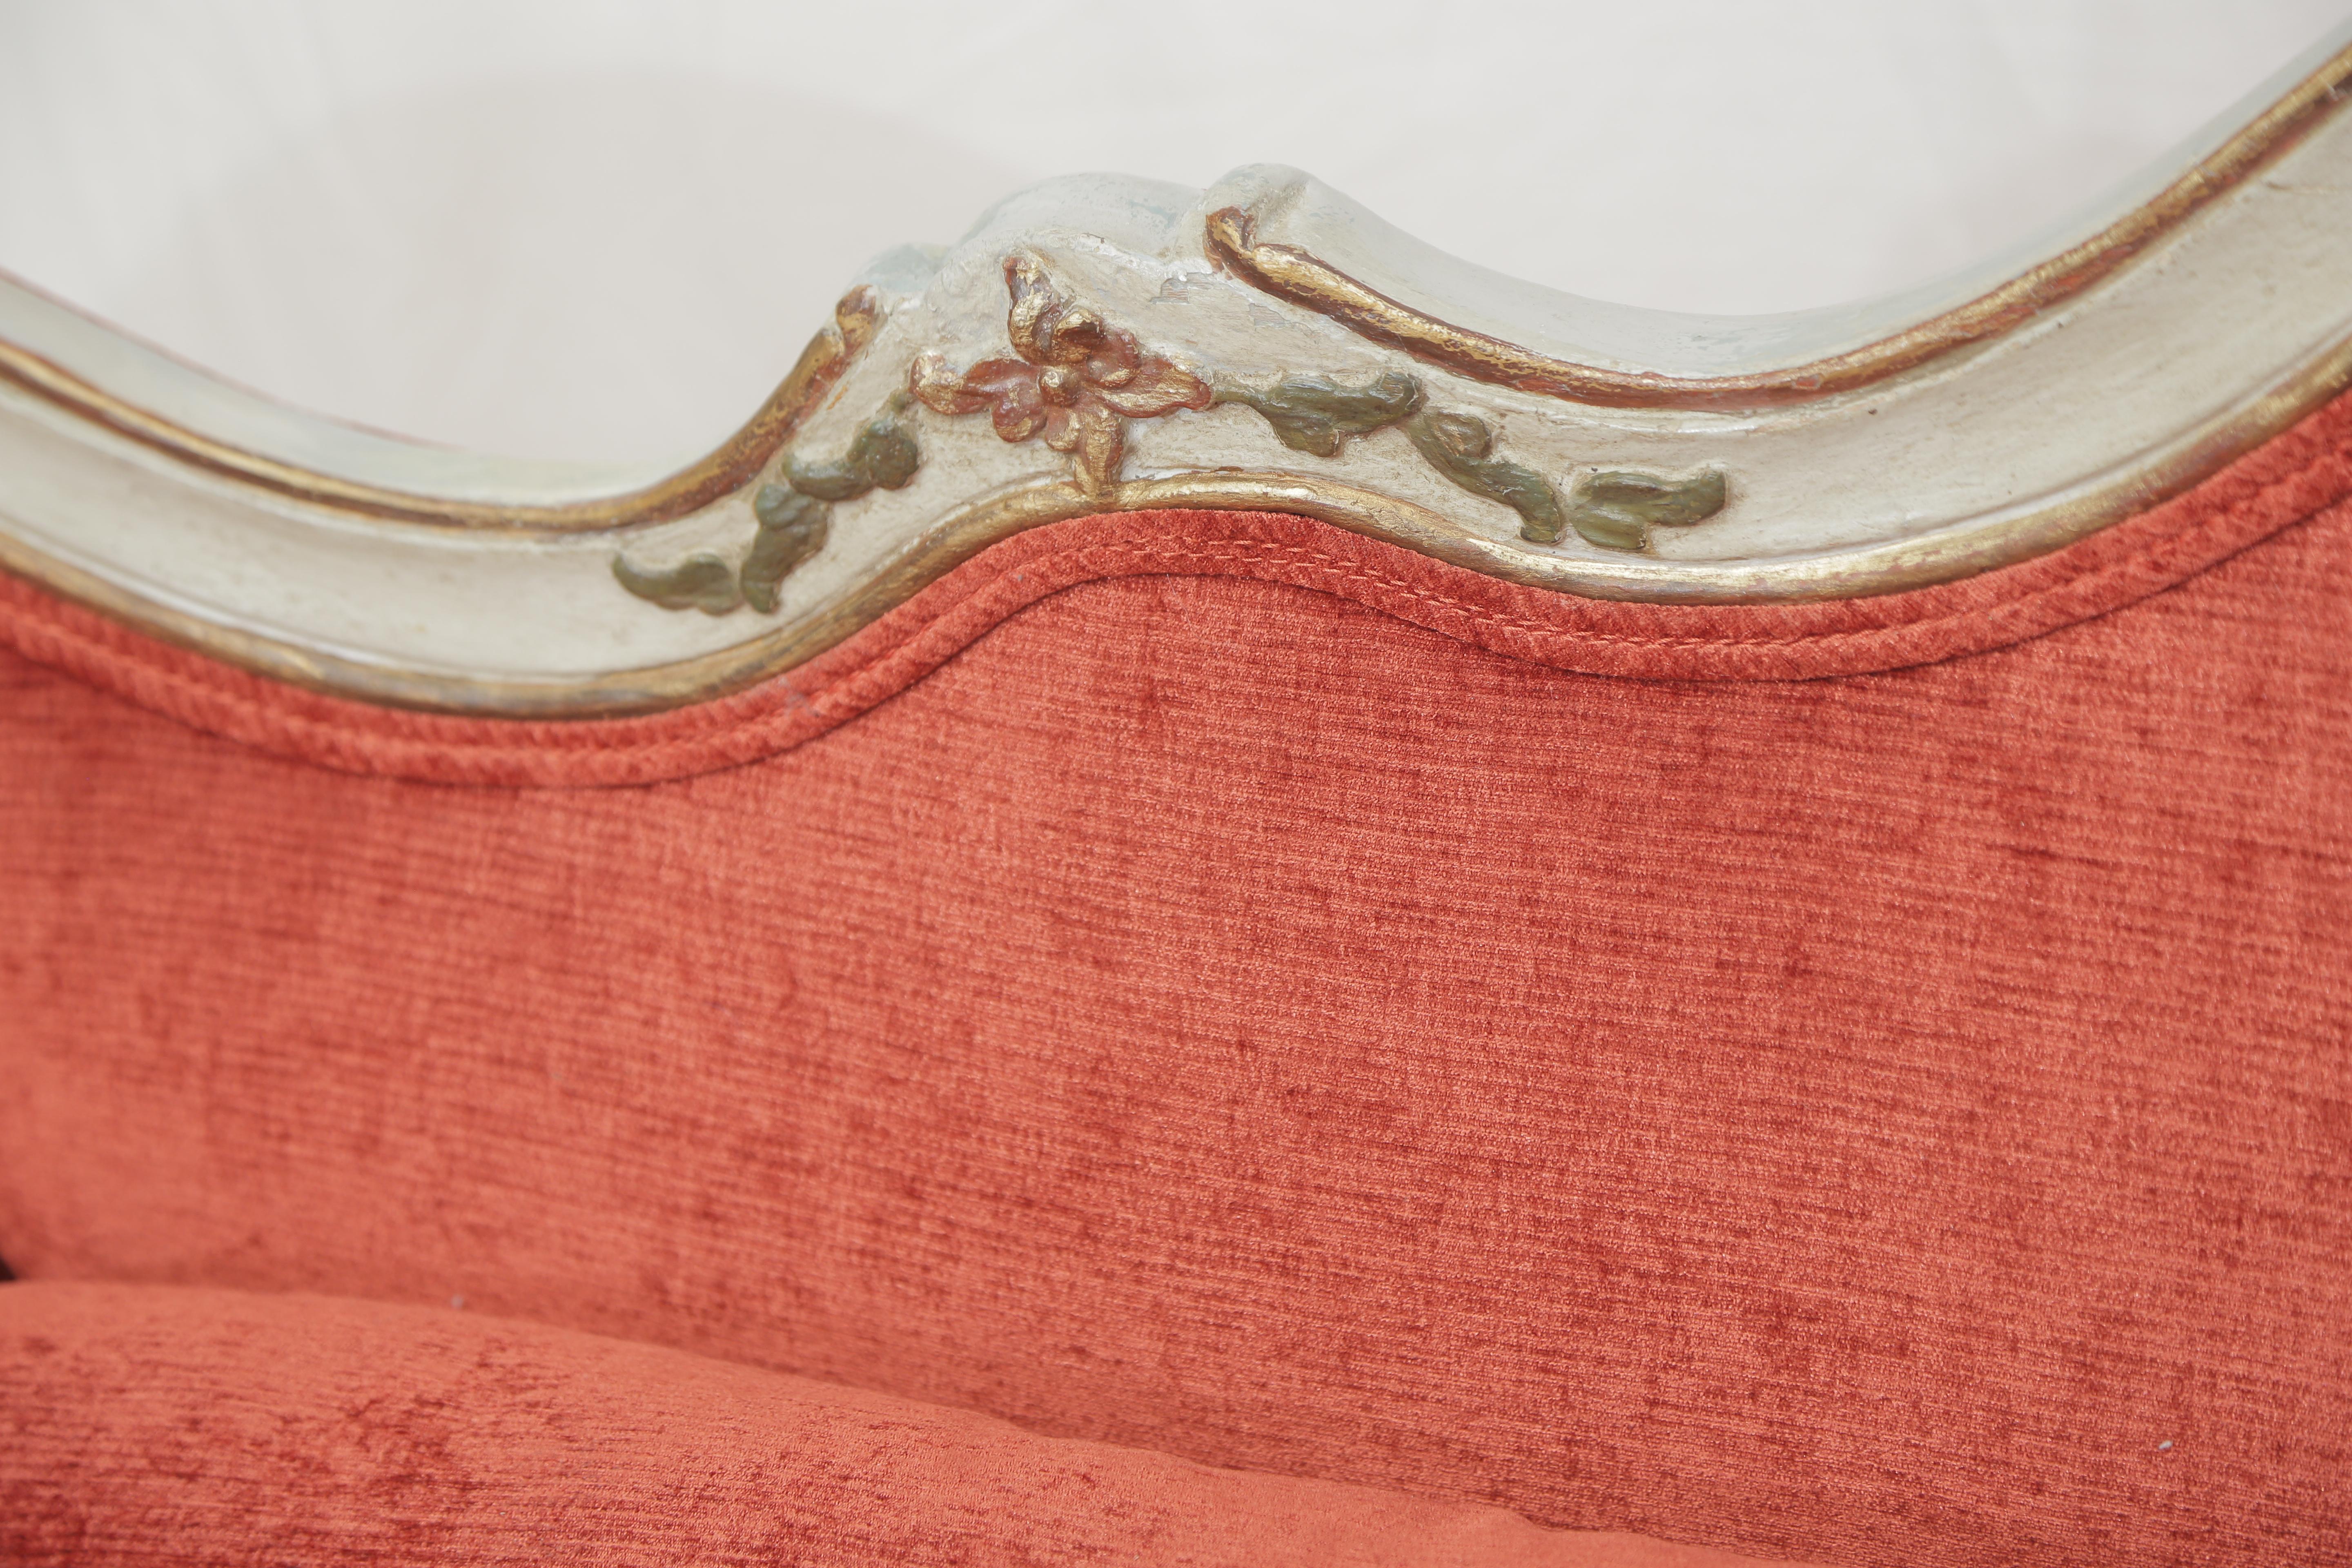 19th century sofa styles